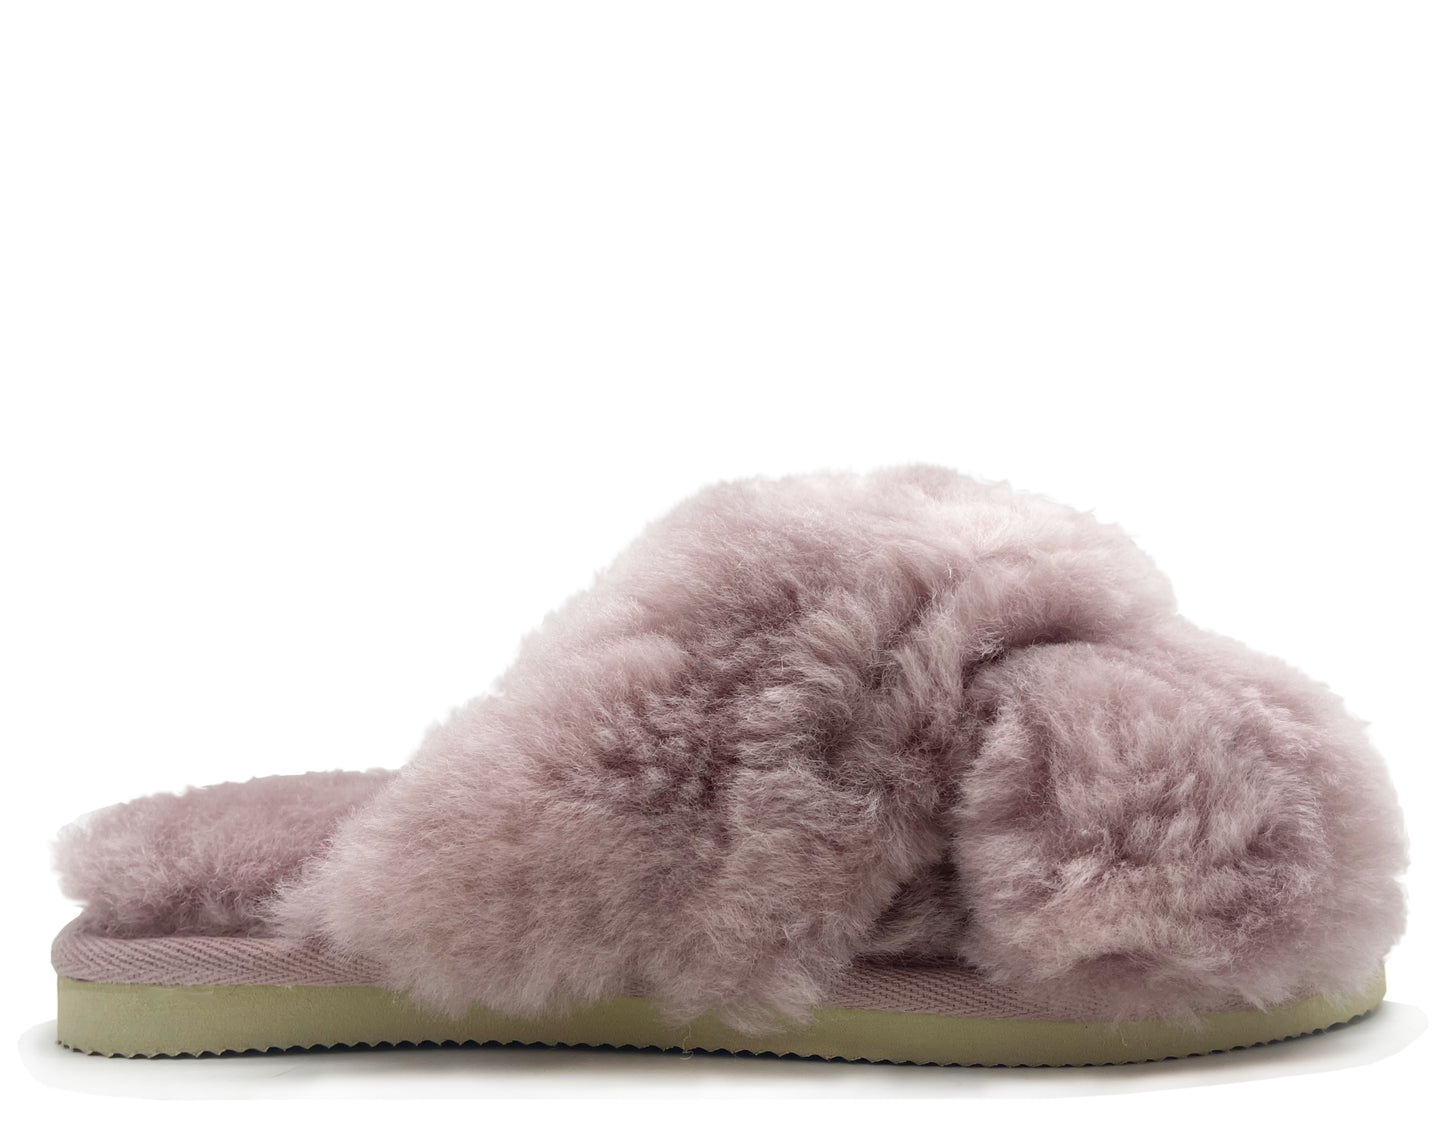 thies 1856 ® Sheep Cross Sandal new pink (W)